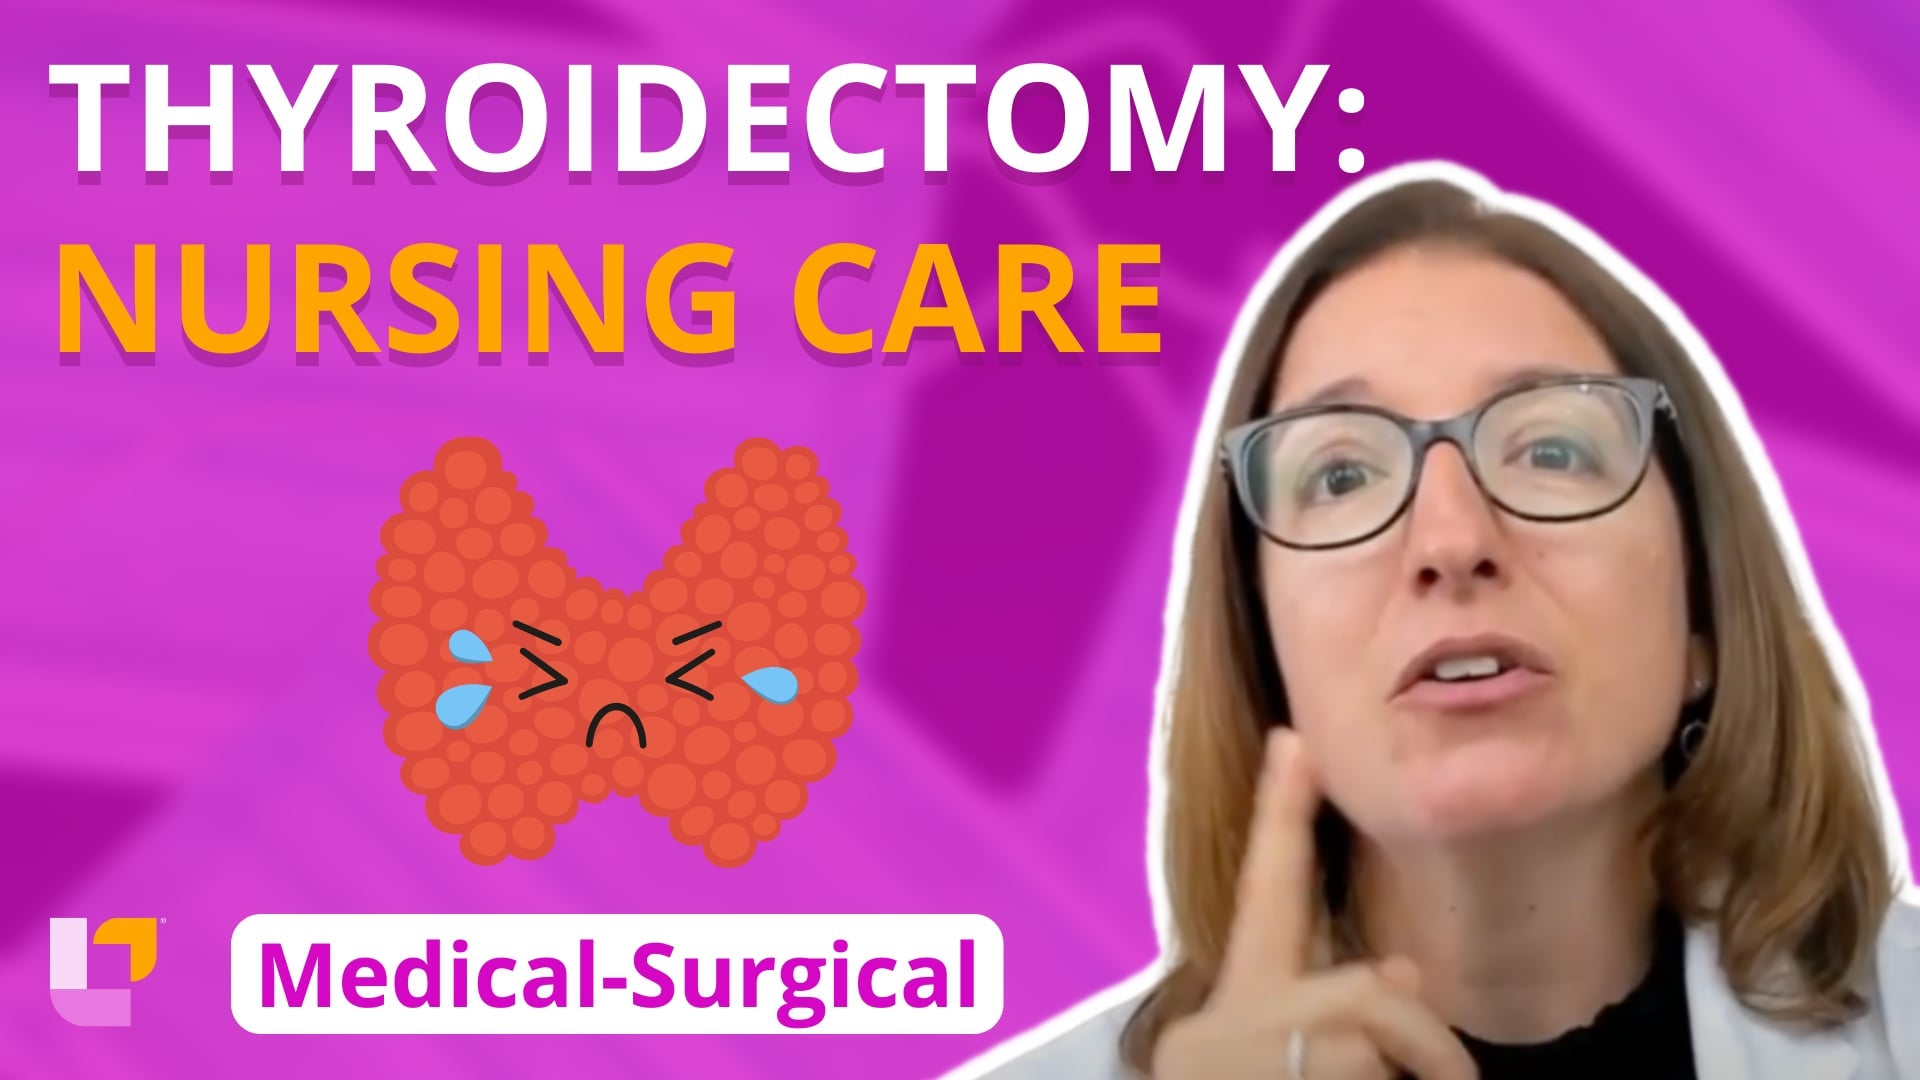 Med-Surg Endocrine System, part 16: Thyroidectomy: Nursing Care - LevelUpRN